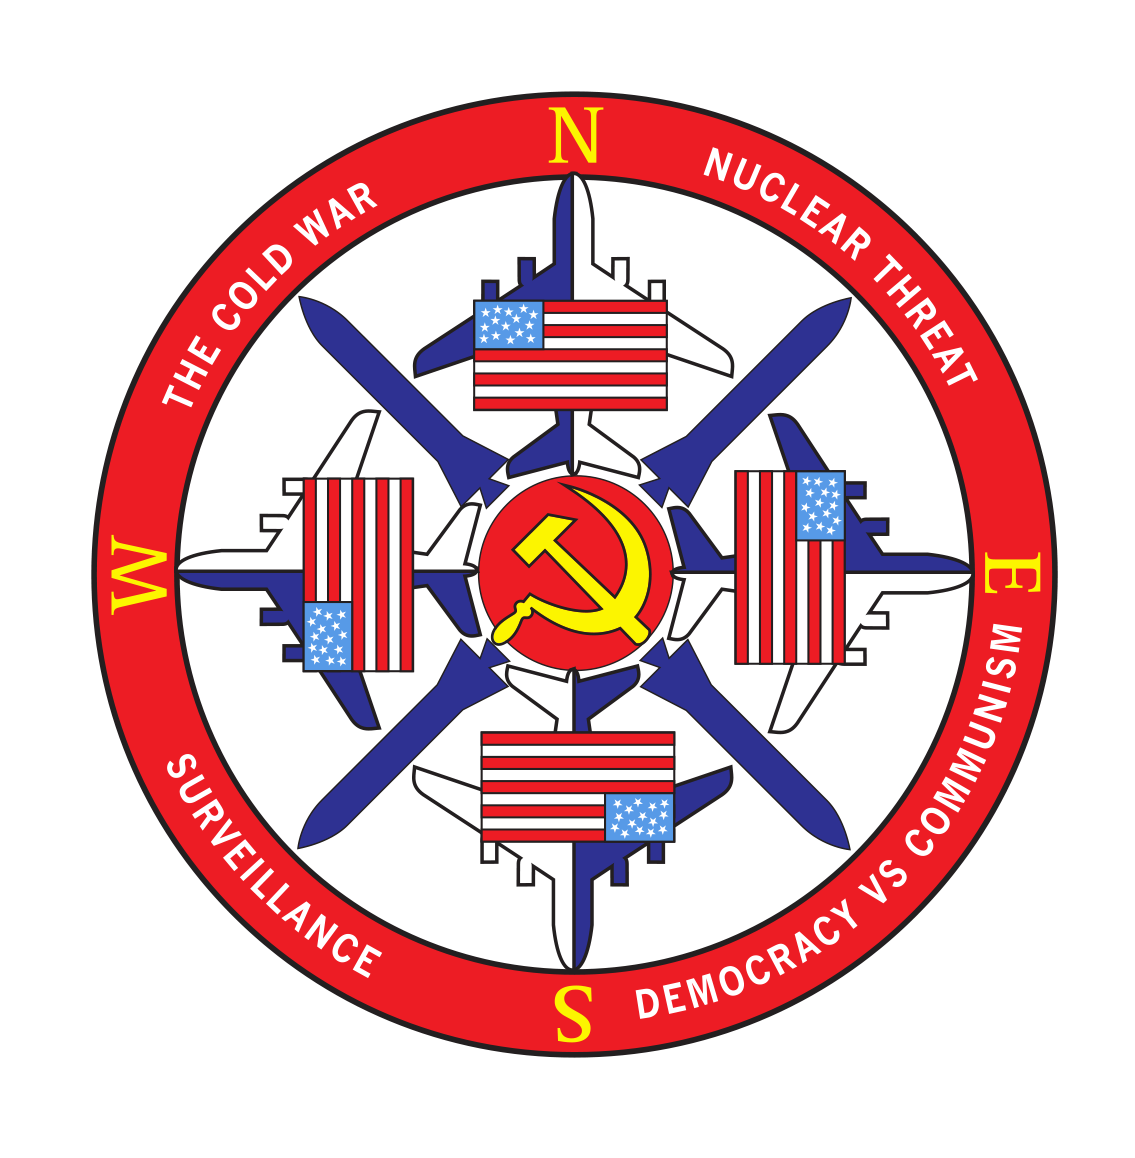 cold war historical society logo